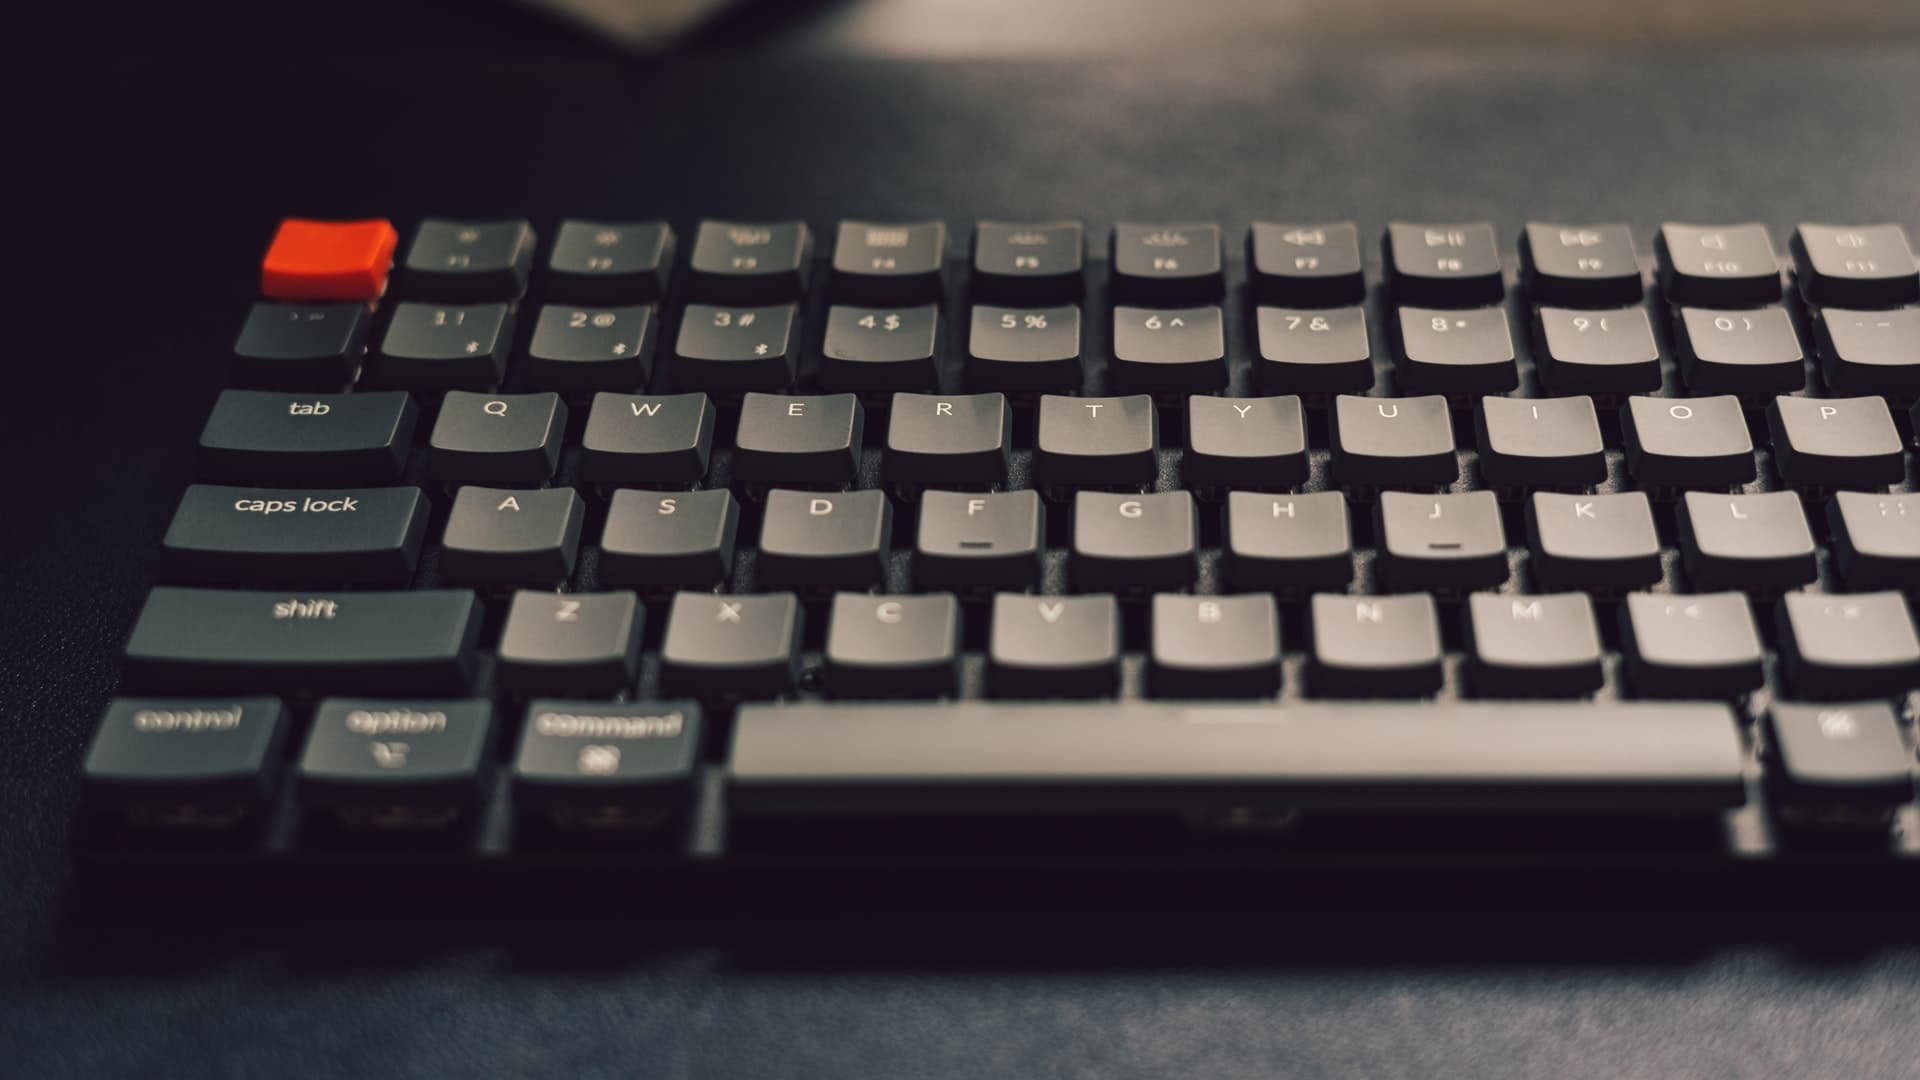 Keychron K2 keyboard, Photo by Sumeesh Nagisetty on Unsplash